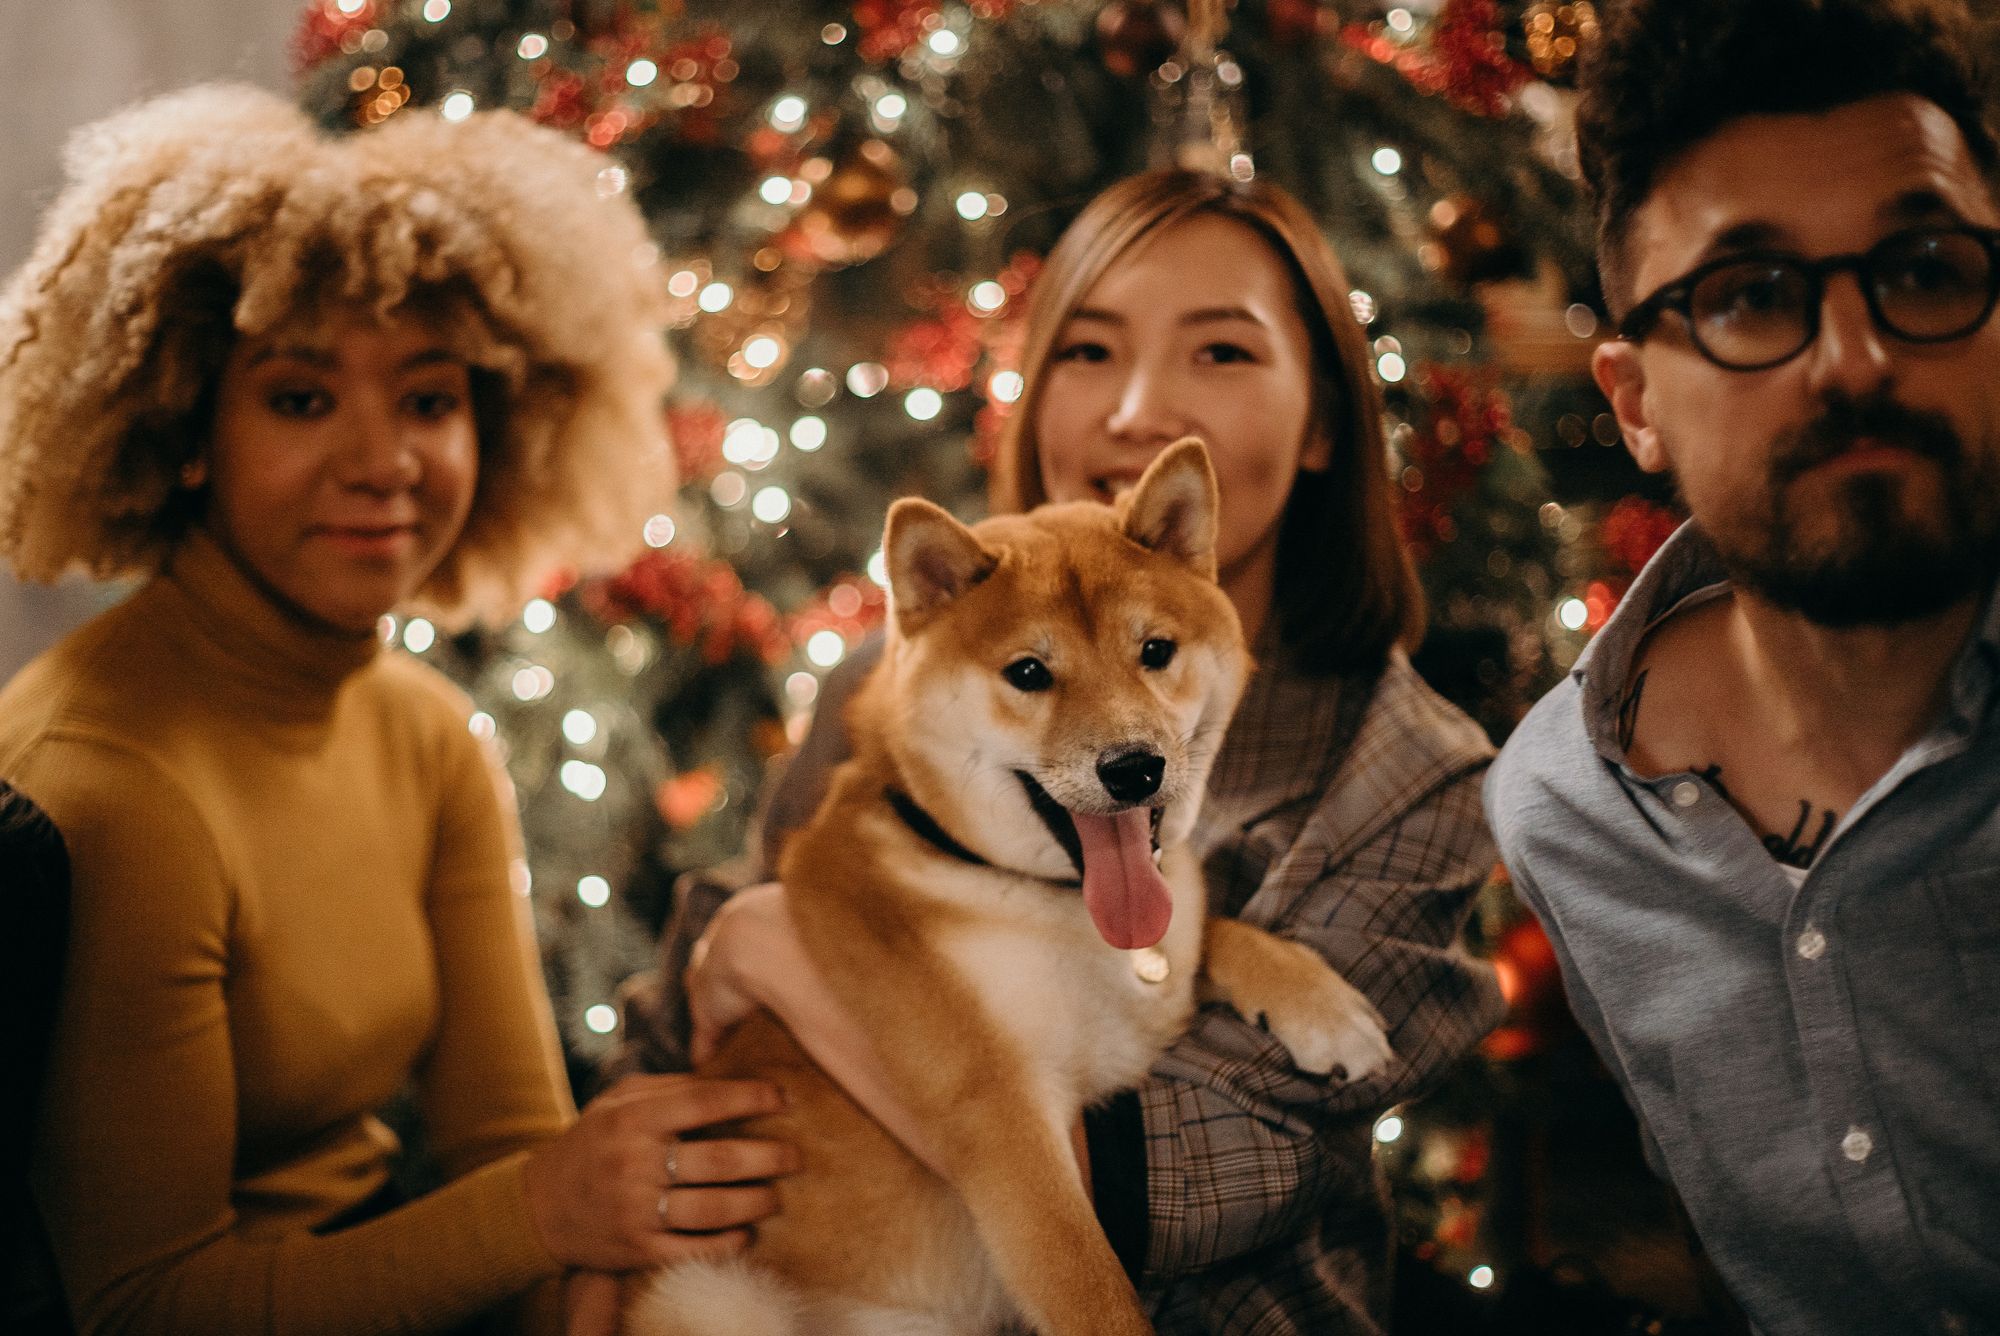 Take Christmas family photos with your dog